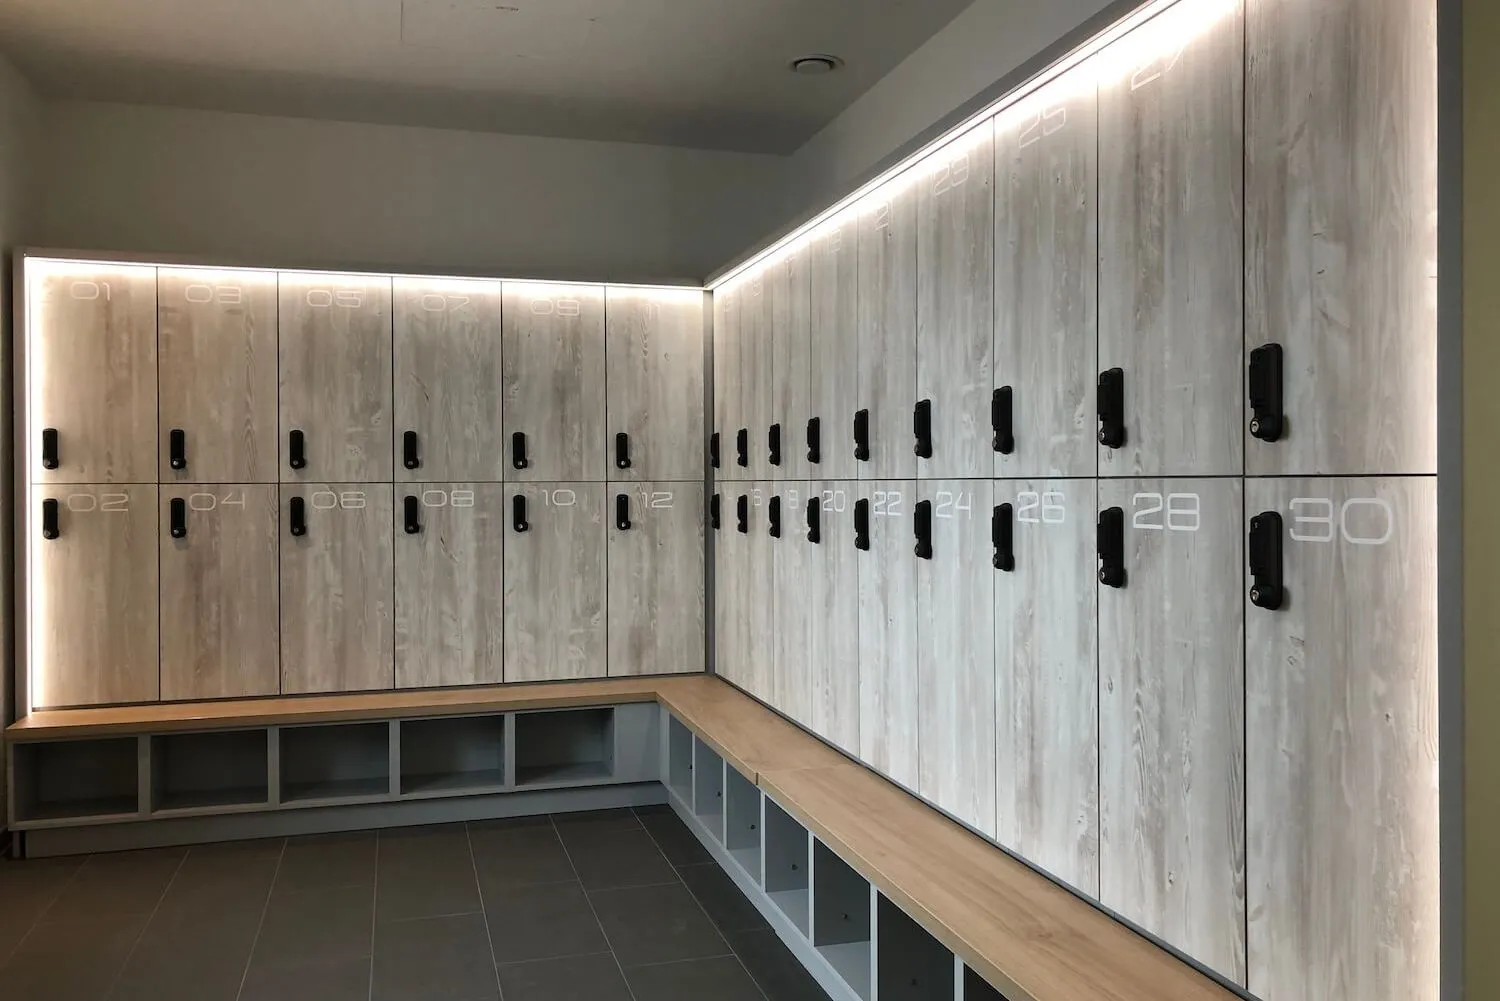 RFID locks on lockers in a gym changing room